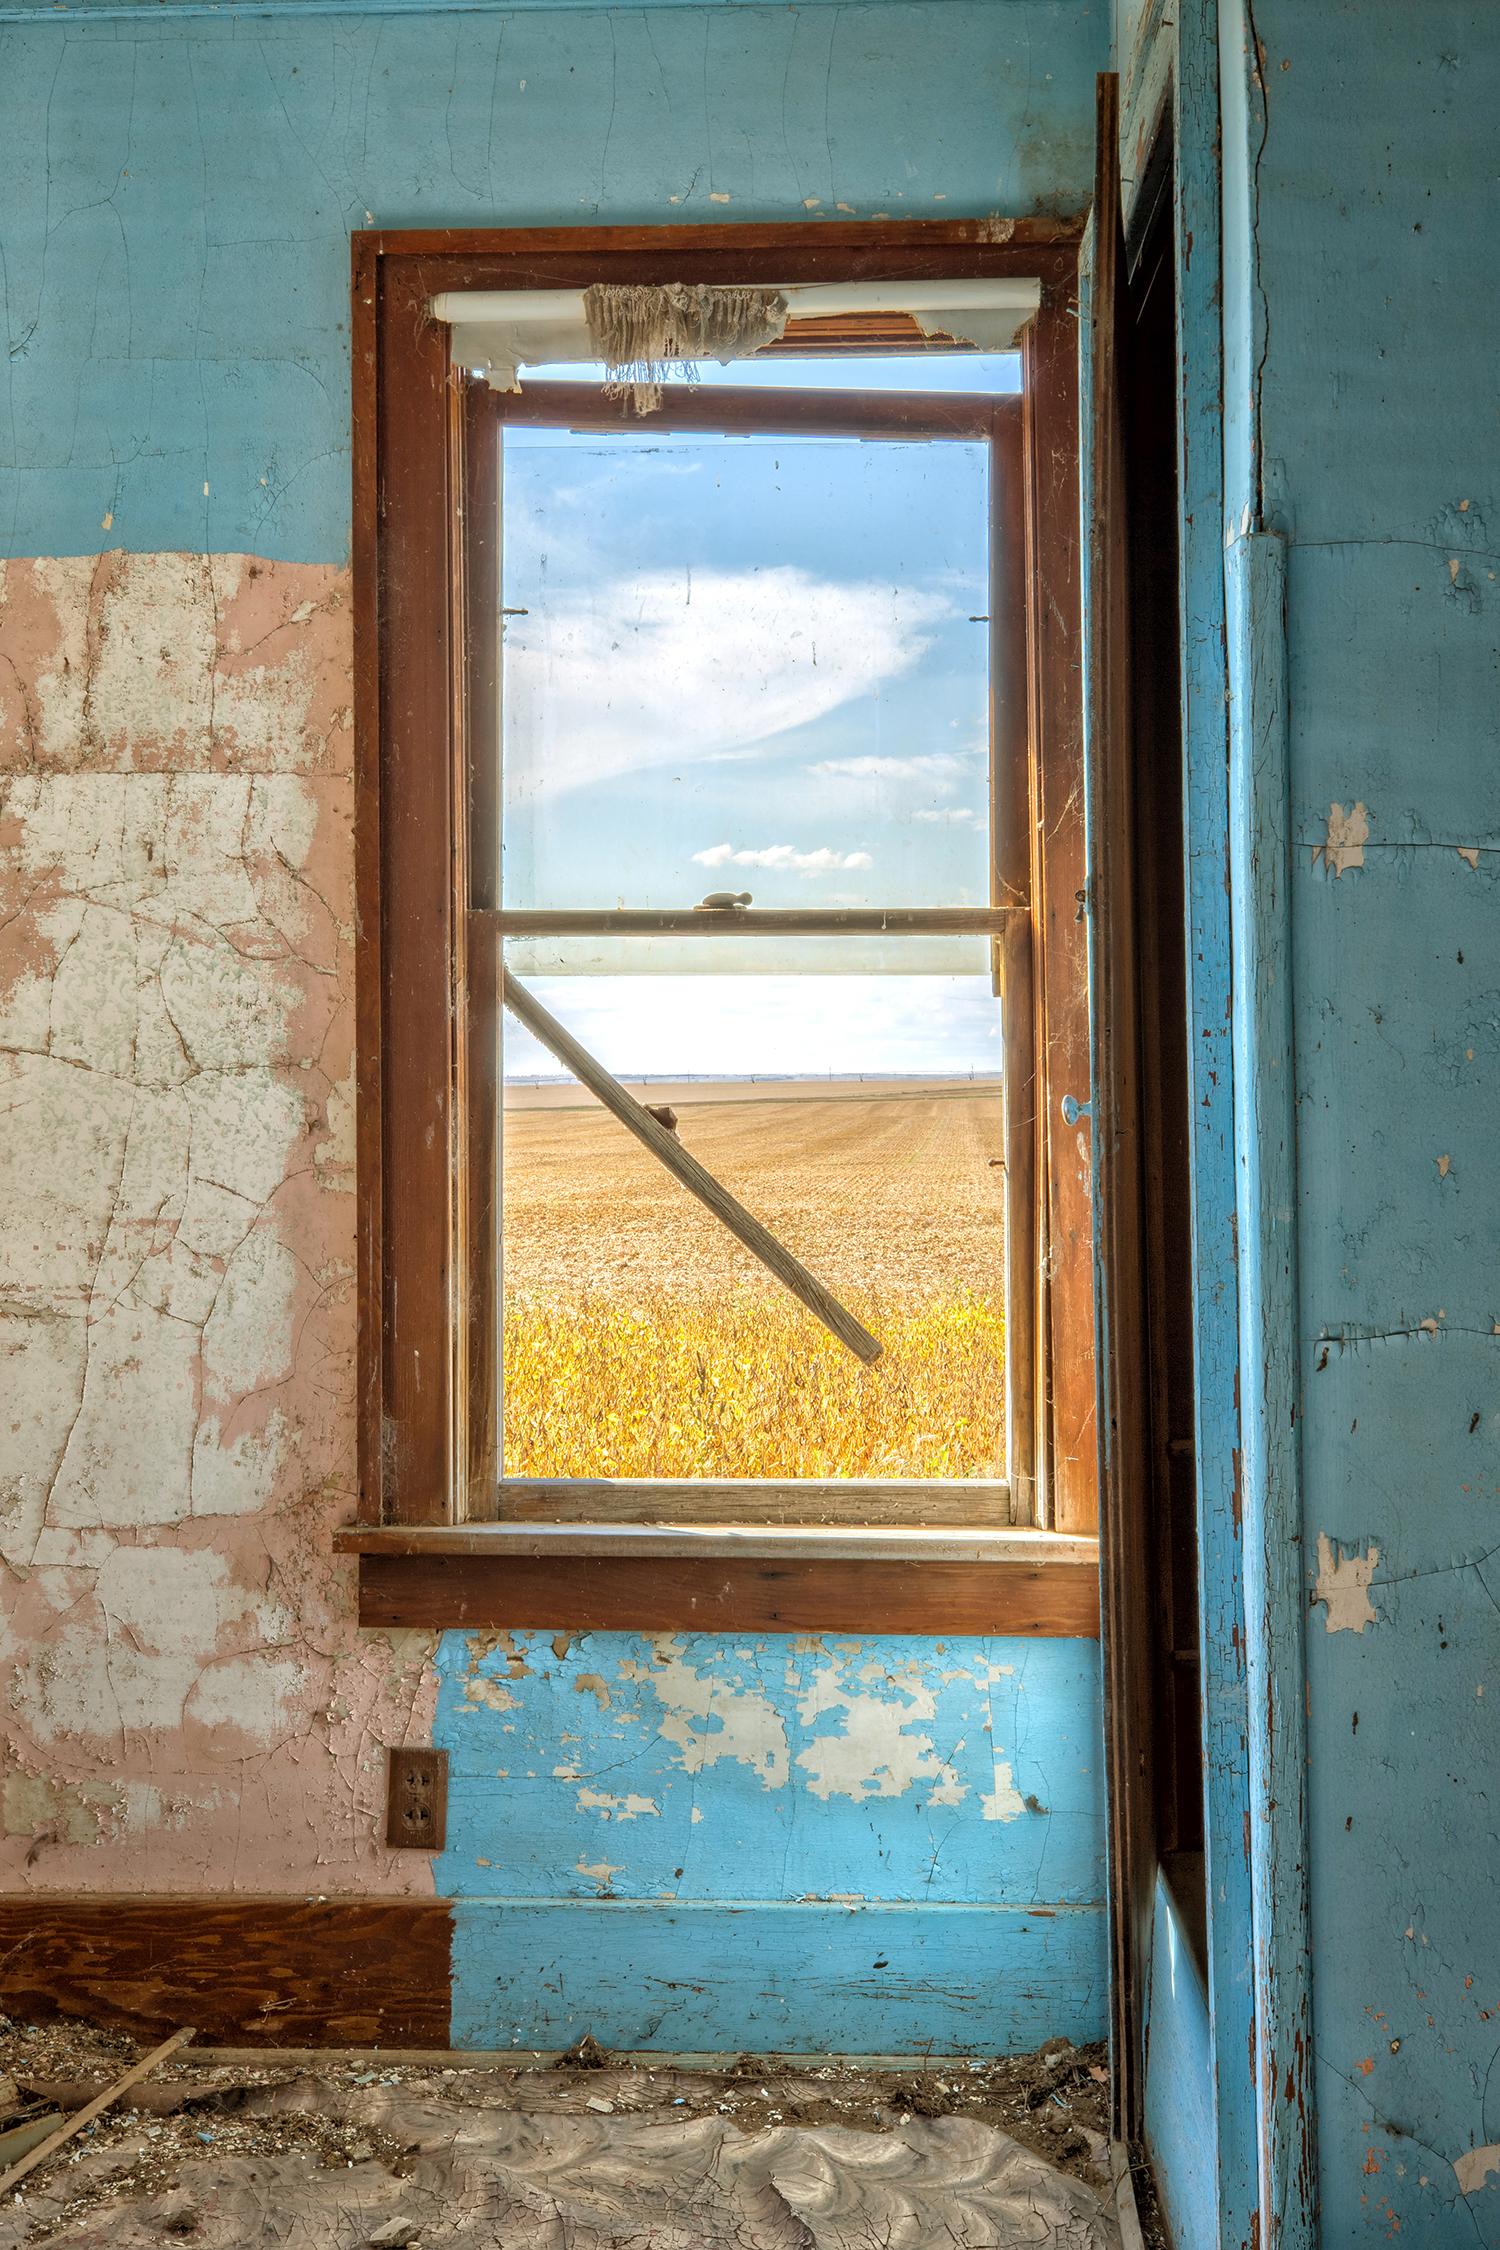 Landscape Photograph Rebecca Skinner - « Interior V », paysage, Dakota du Nord, fenêtre, champ, bleu, photographie couleur